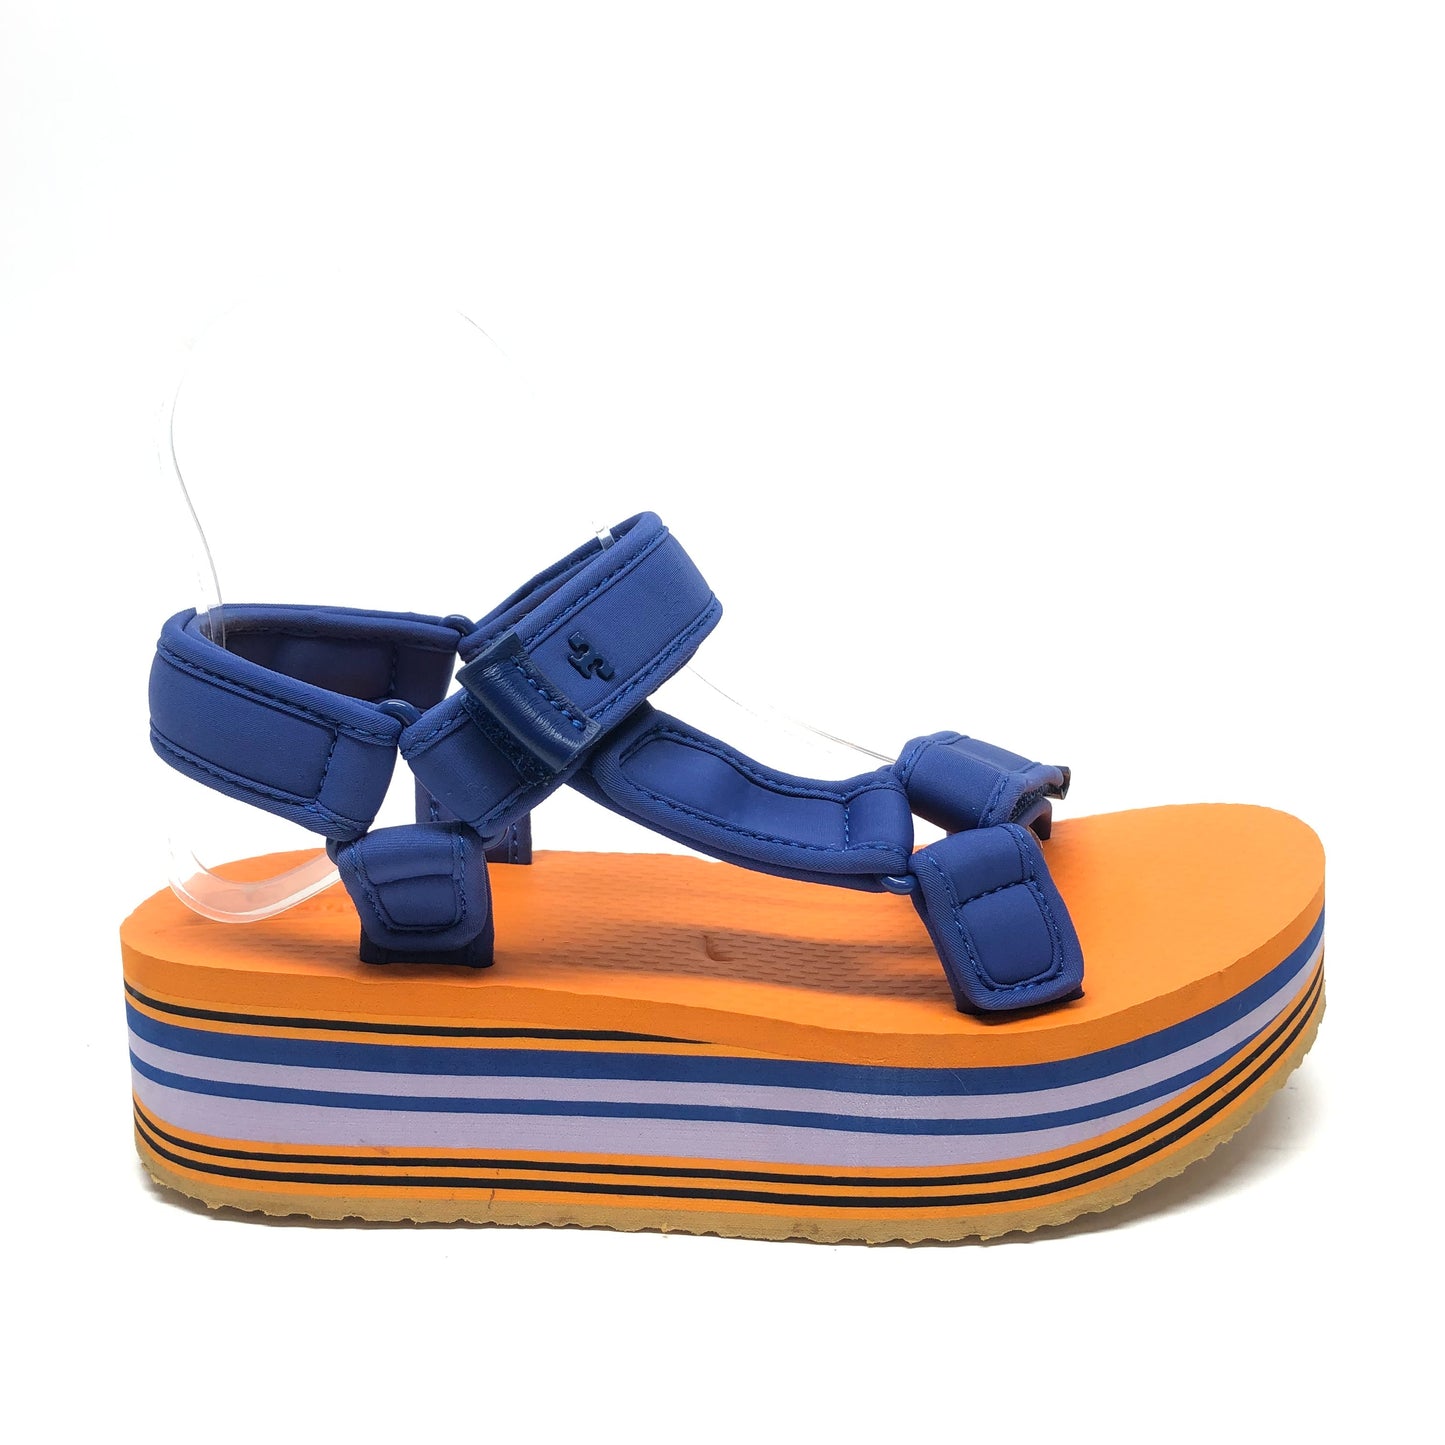 Blue & Orange Sandals Heels Platform Tory Burch, Size 8